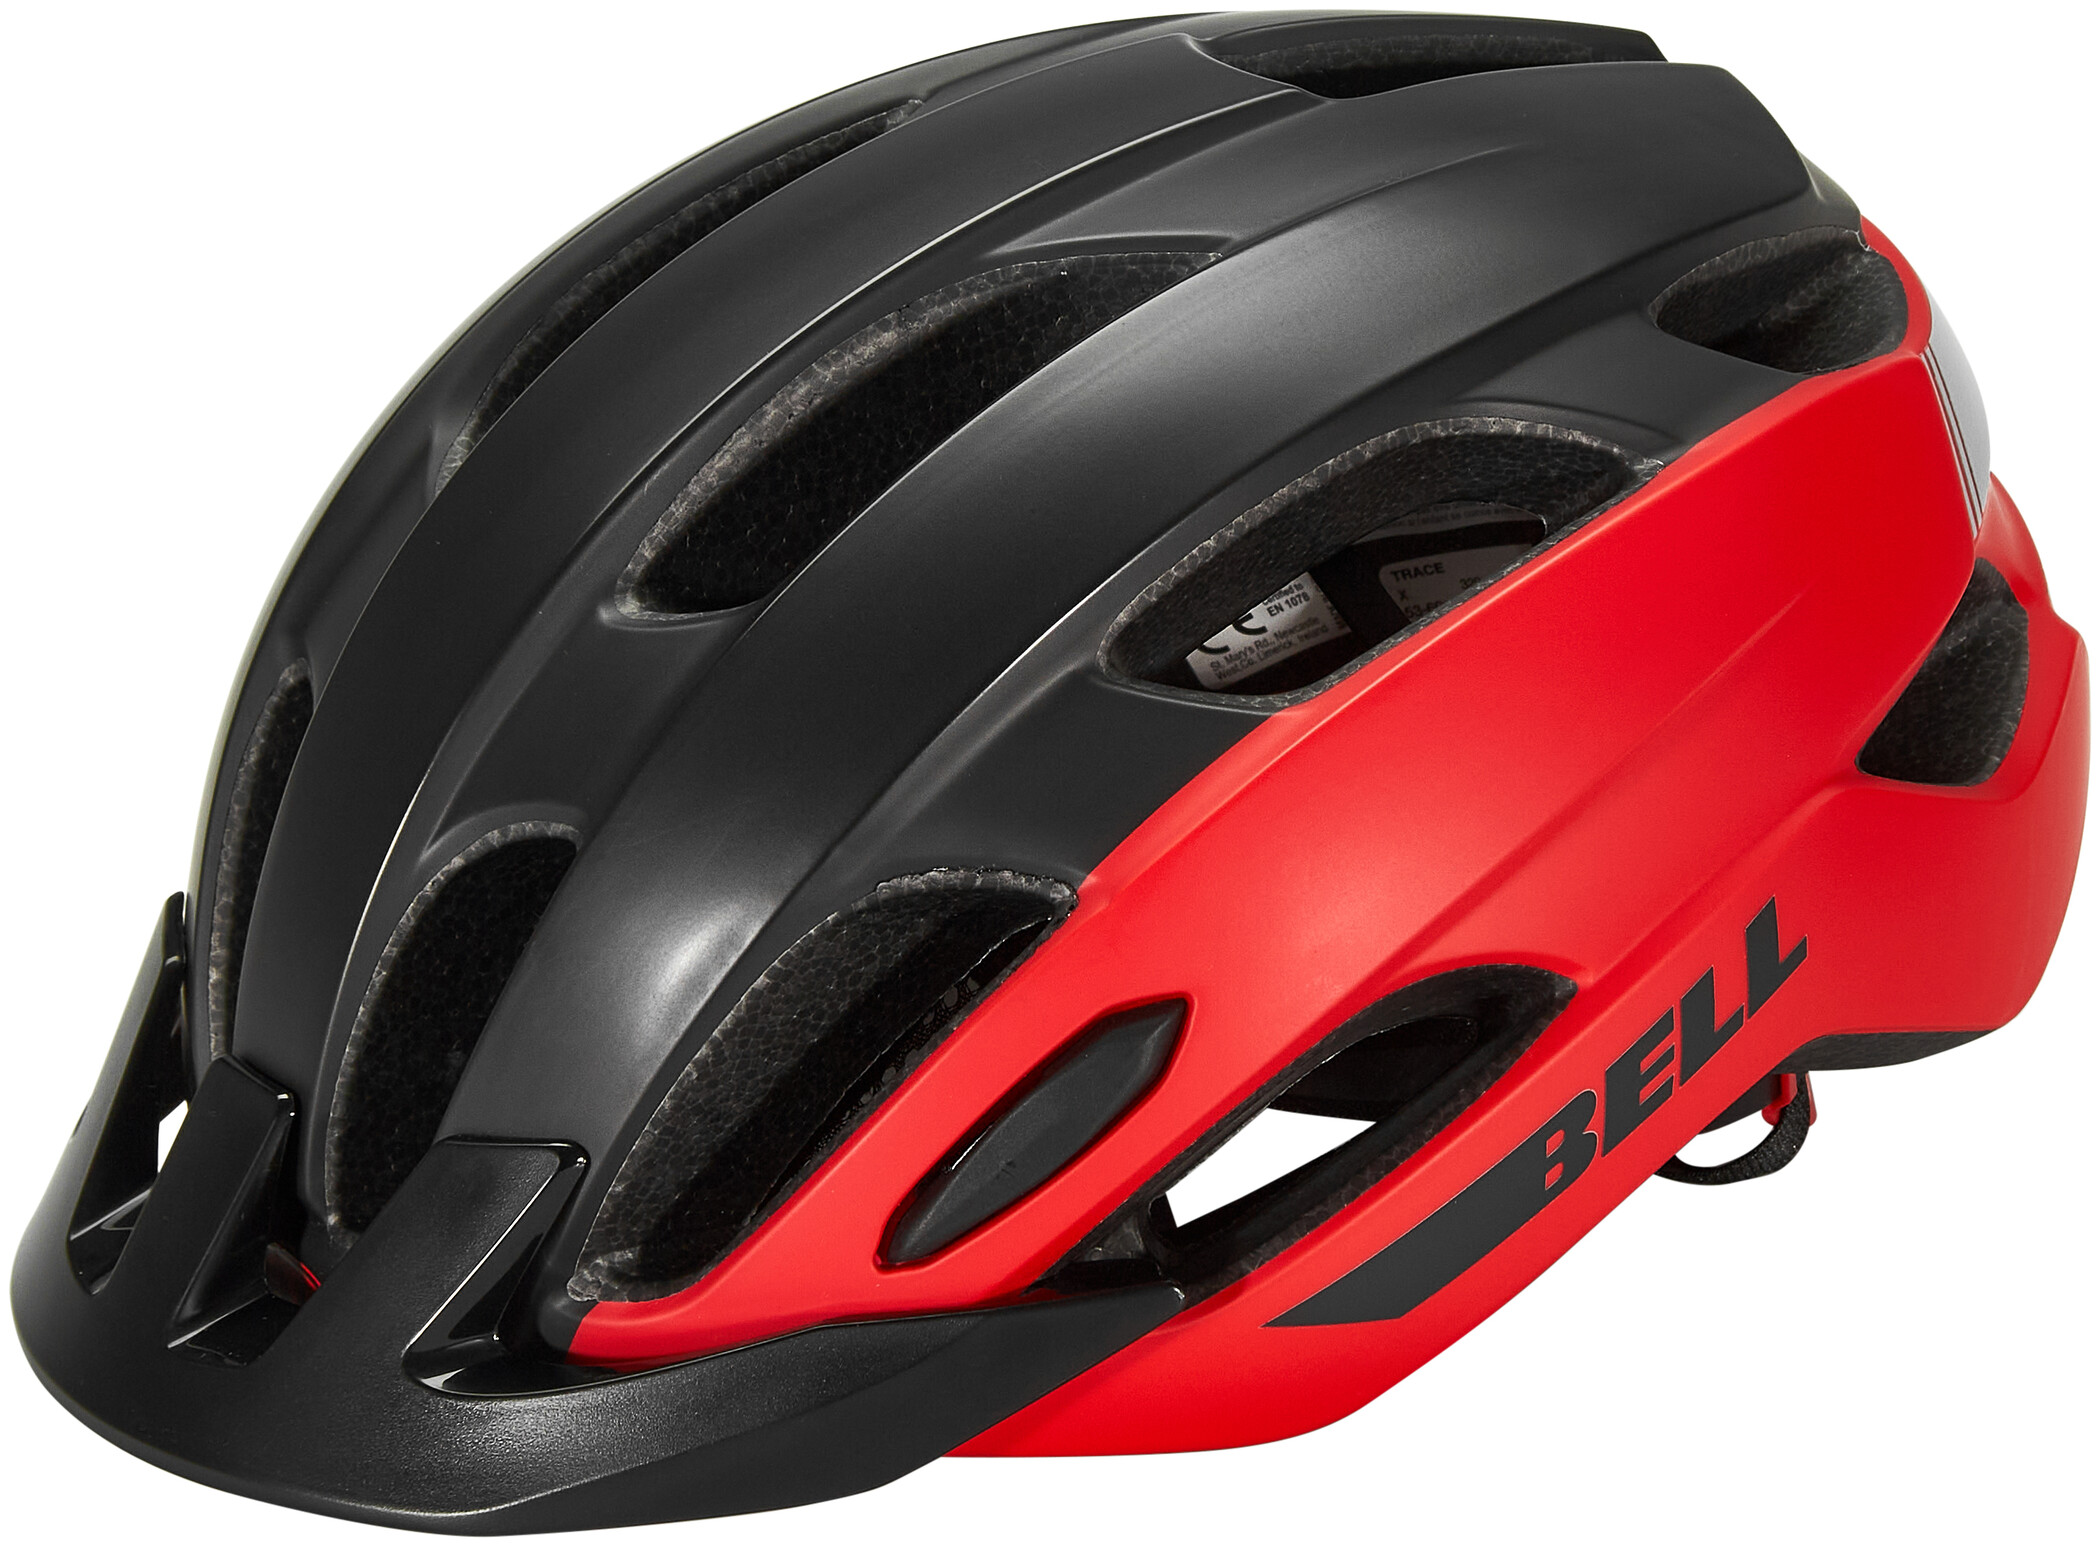 Bell Tracker MTB Cycling Helmet Red Adjustable Ergo Fit Bike Ride Commuting 